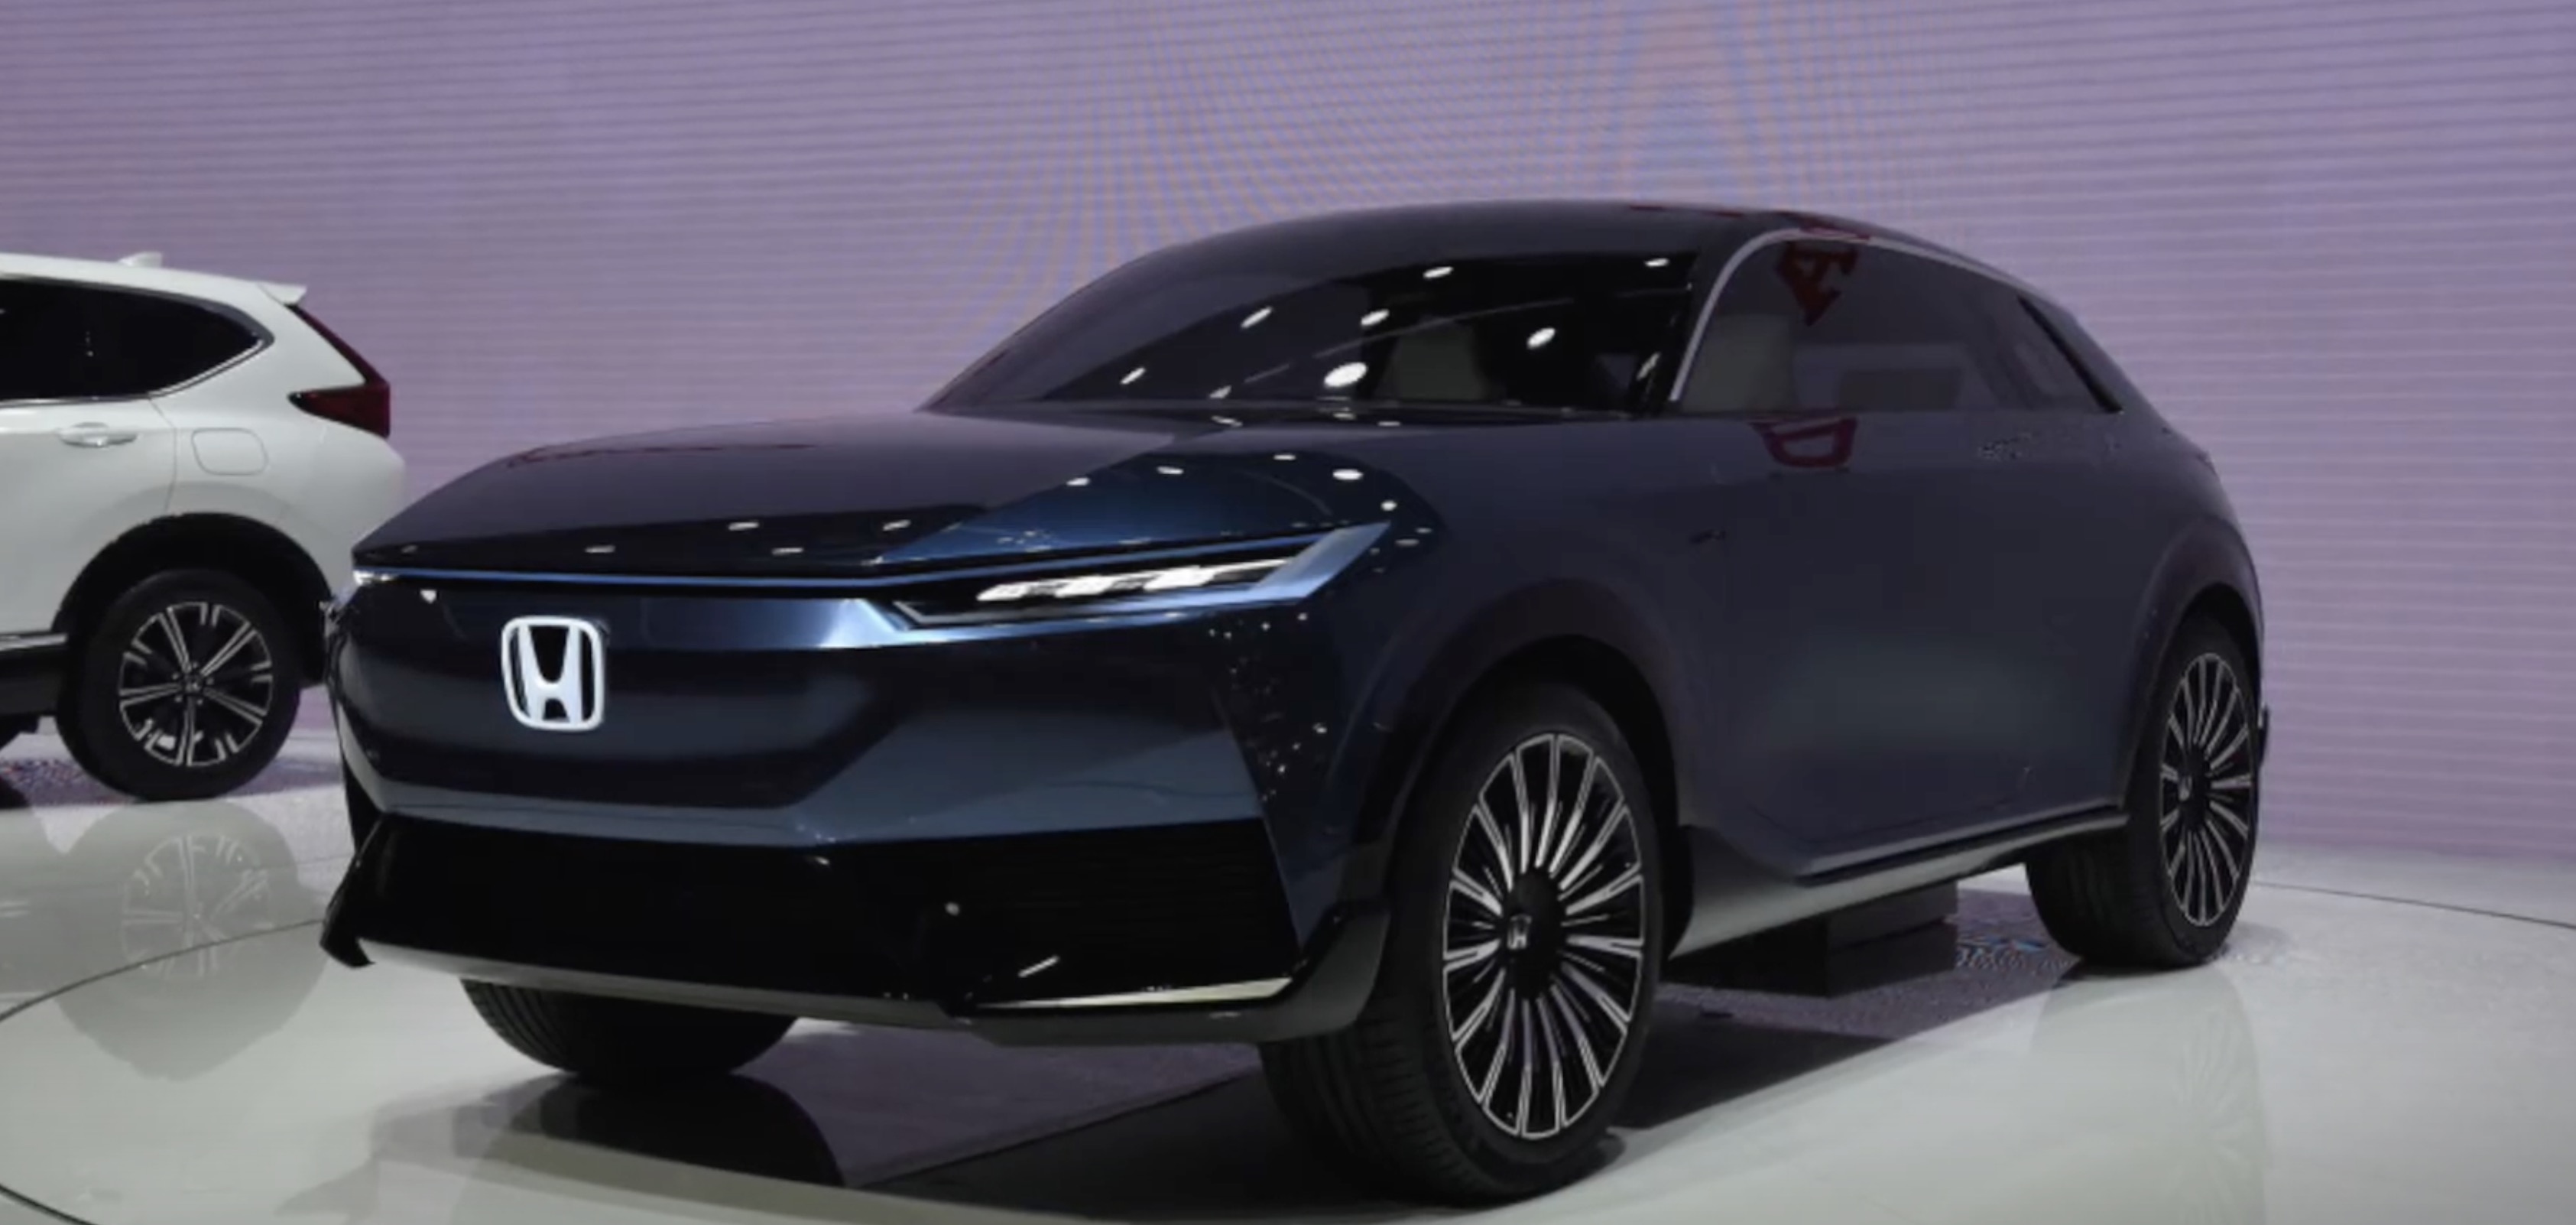 Honda unveils sleek new electric SUV concept, showing 'future mass